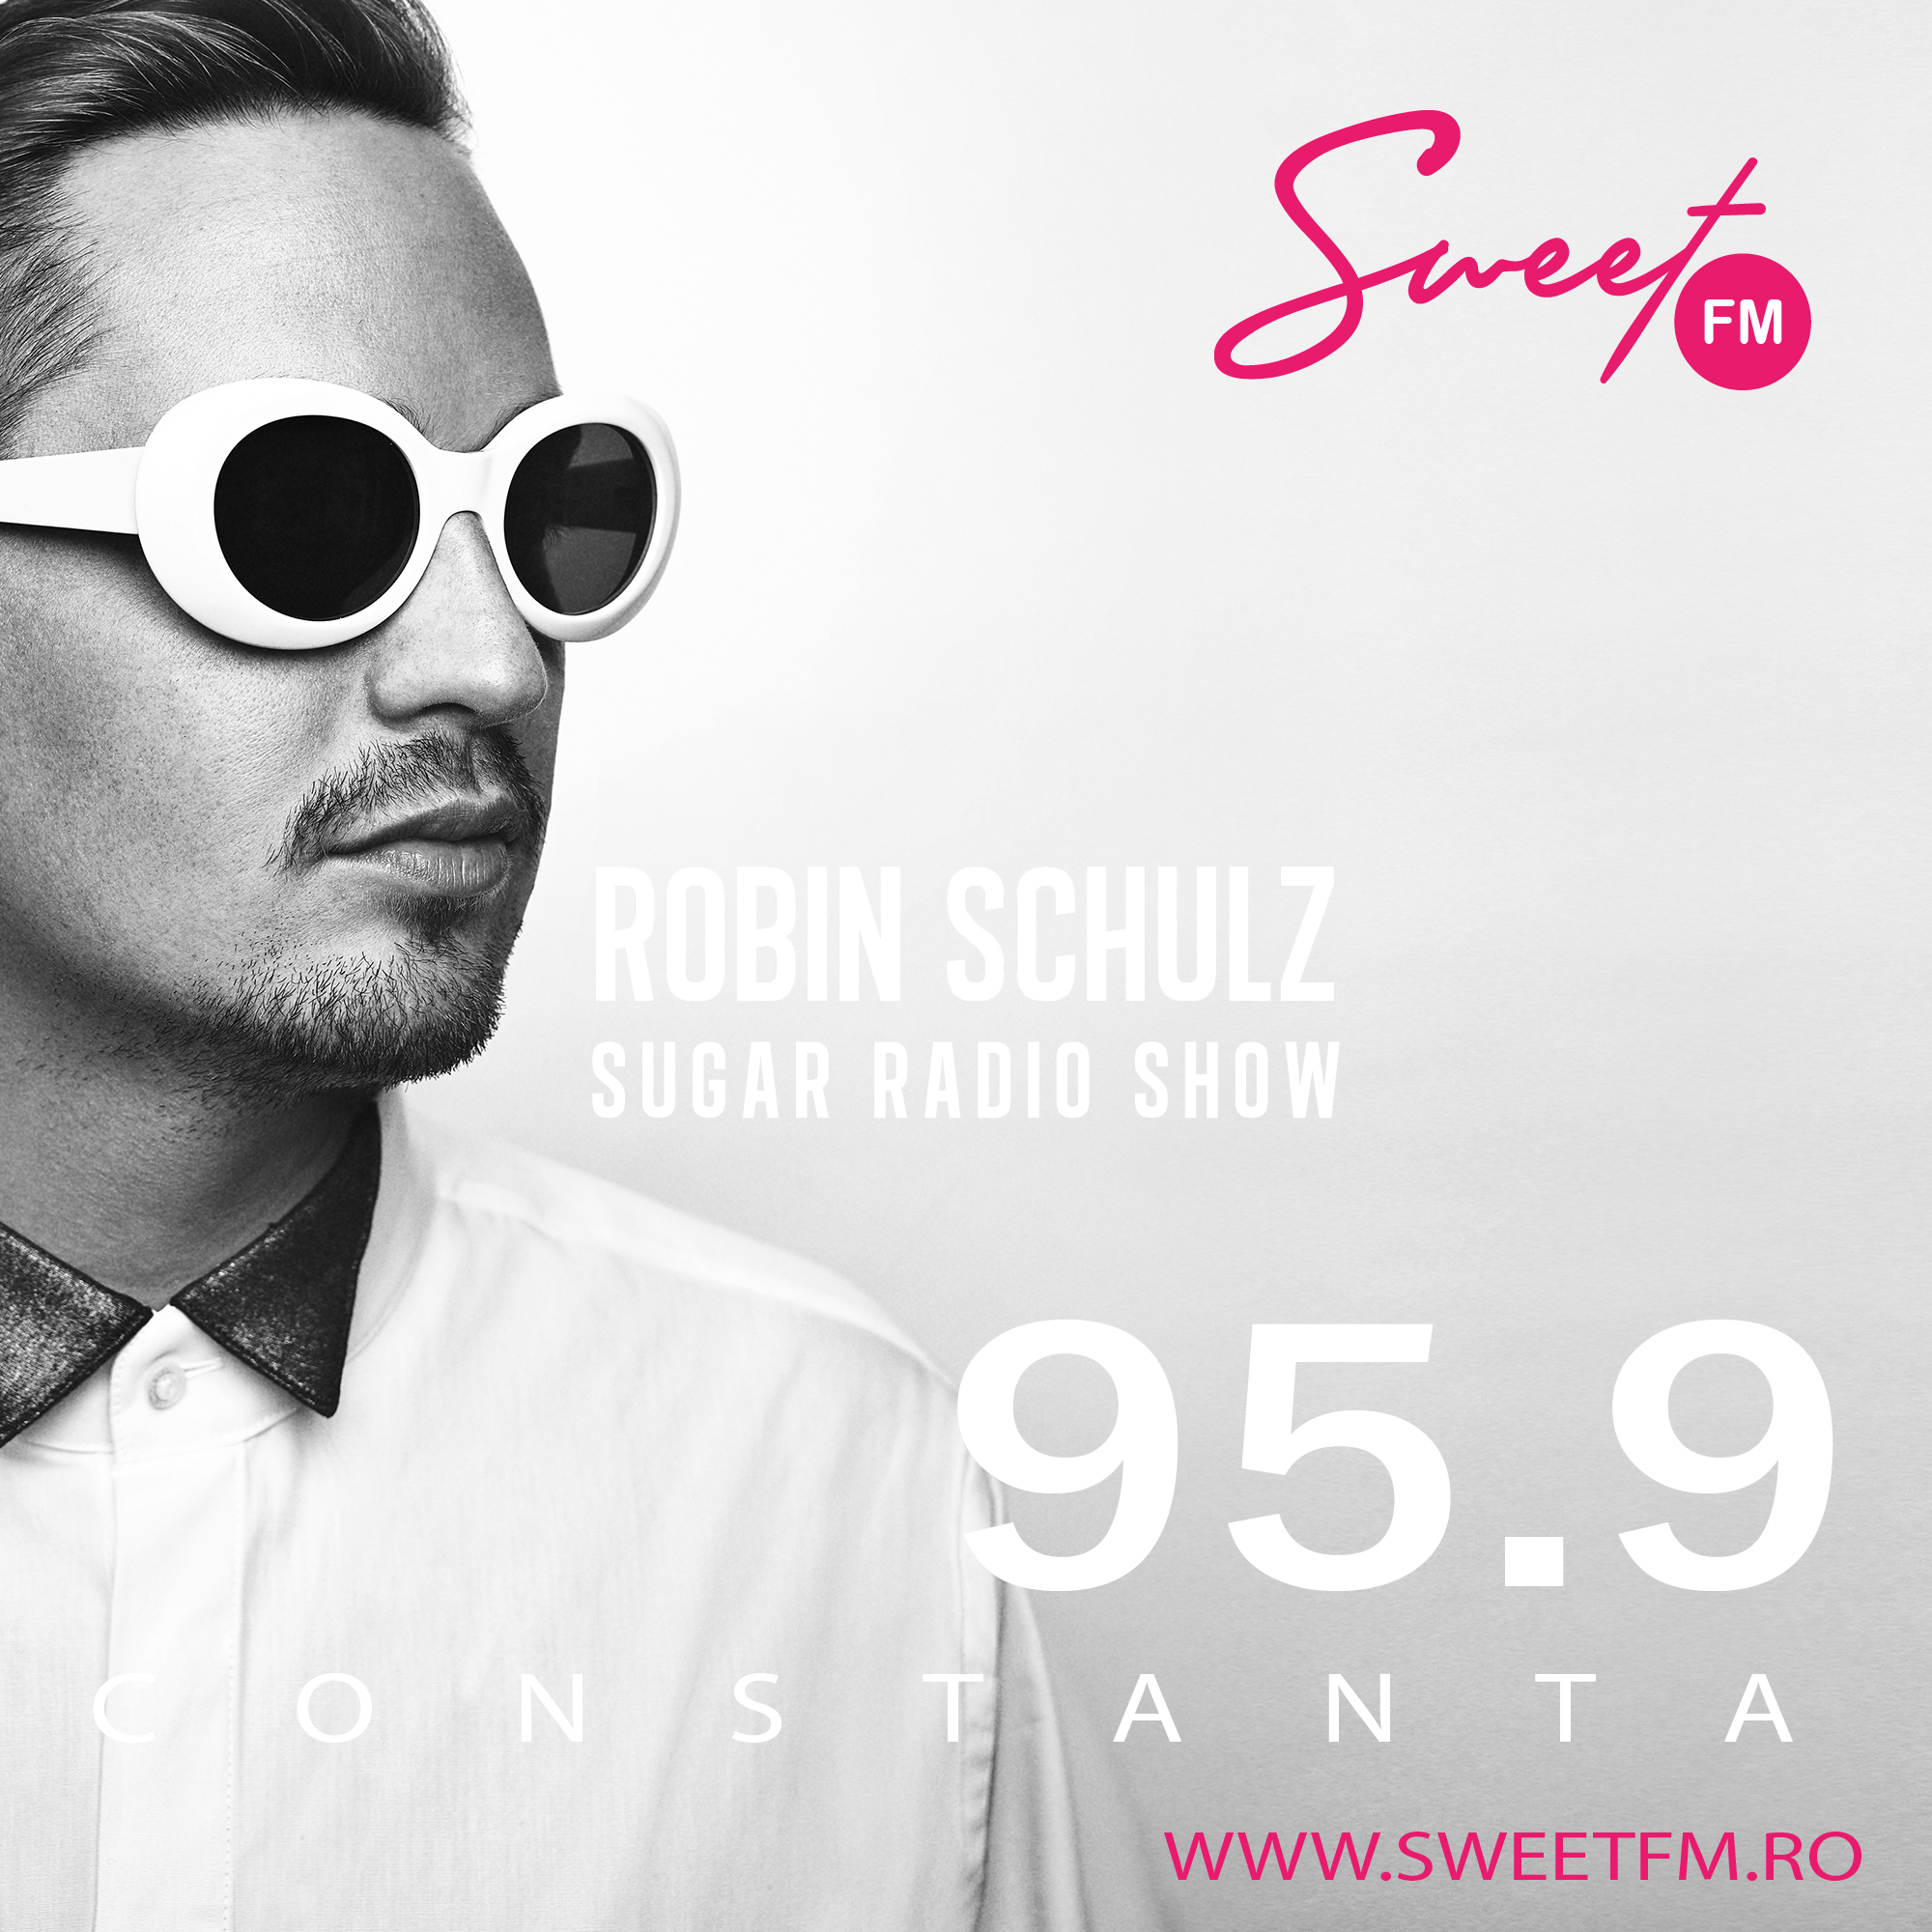 Robin Schulz – Sugar Radio Show